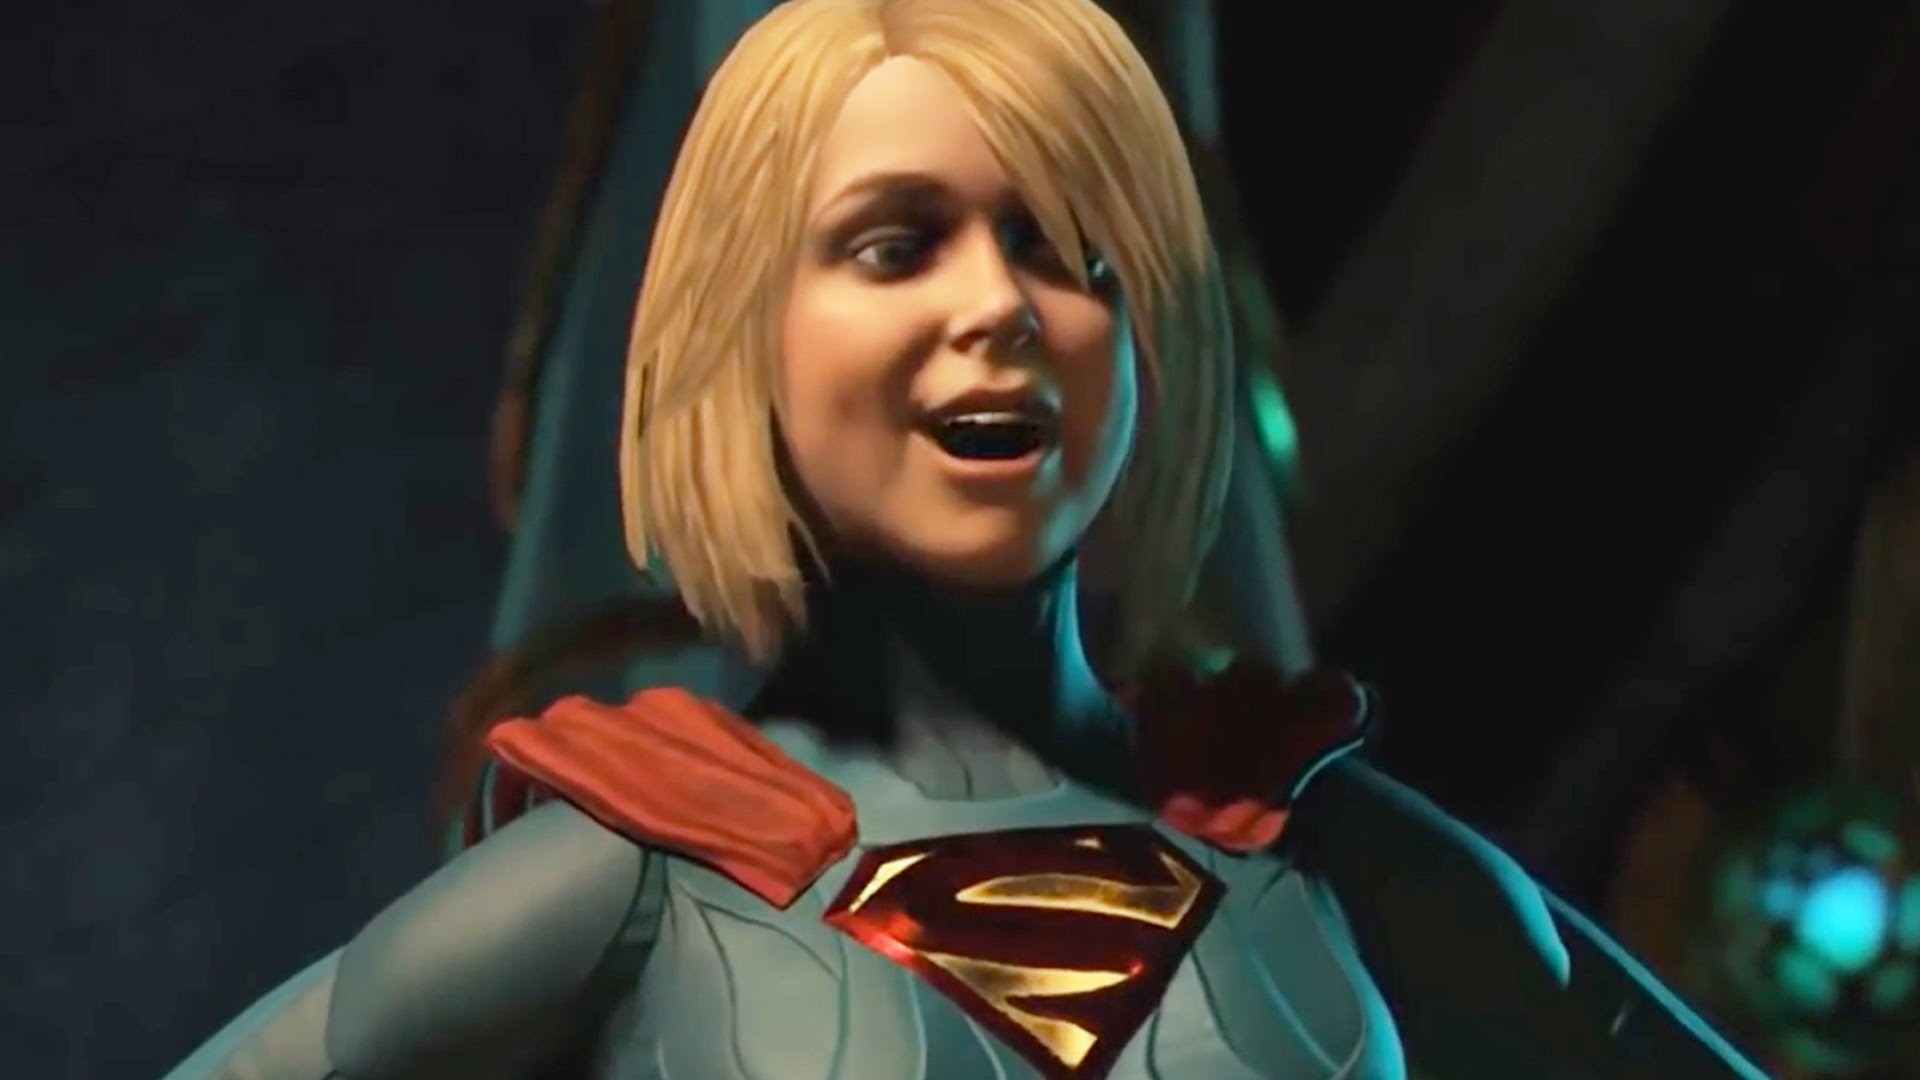 1920x1080 Injustice 2 Gameplay: Supergirl Trailer + Batman Superhero FXL 2017 -  YouTube